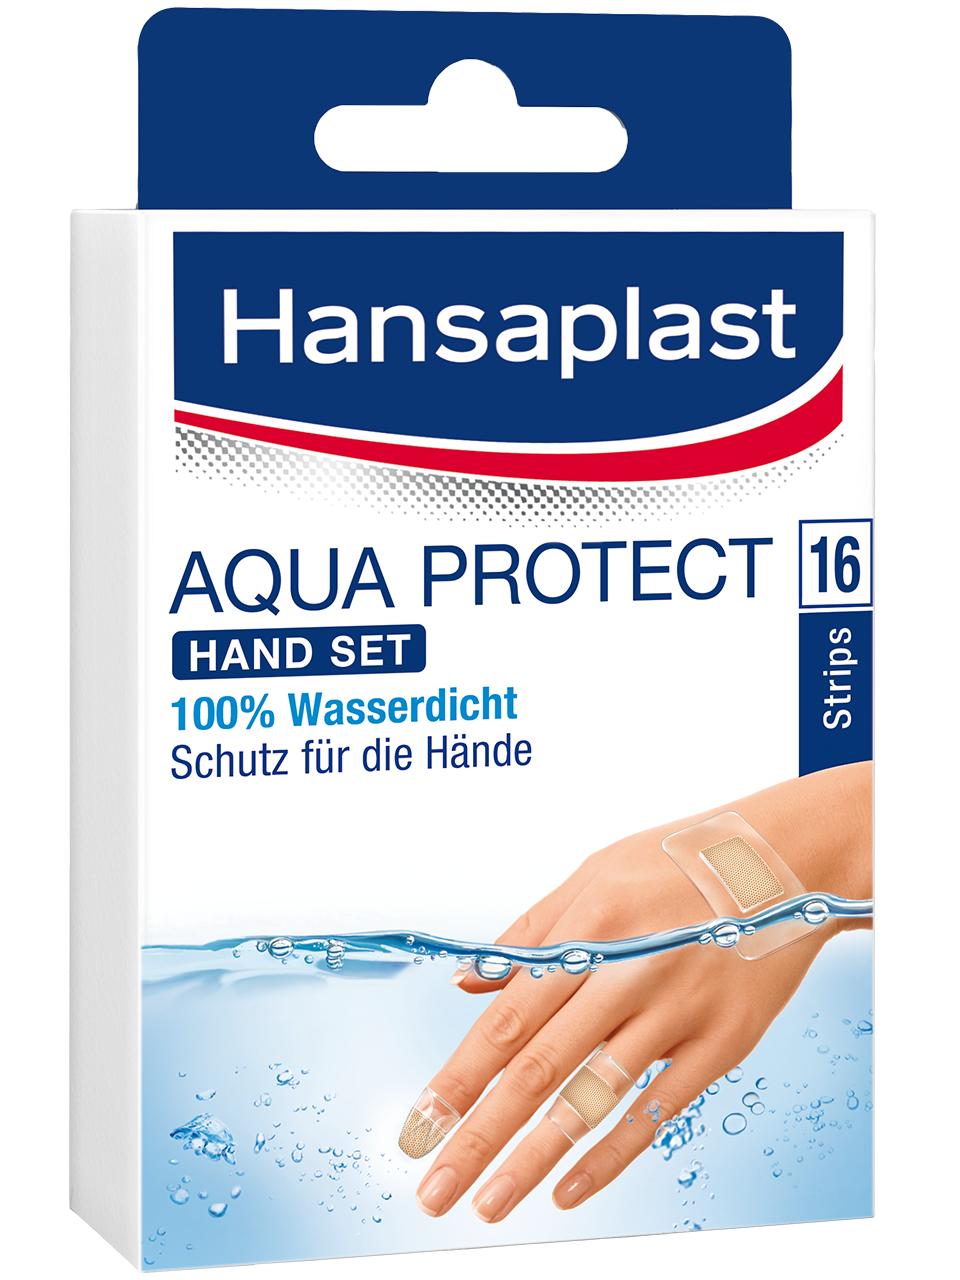 Hansaplast Aqua Protect Hand Set.